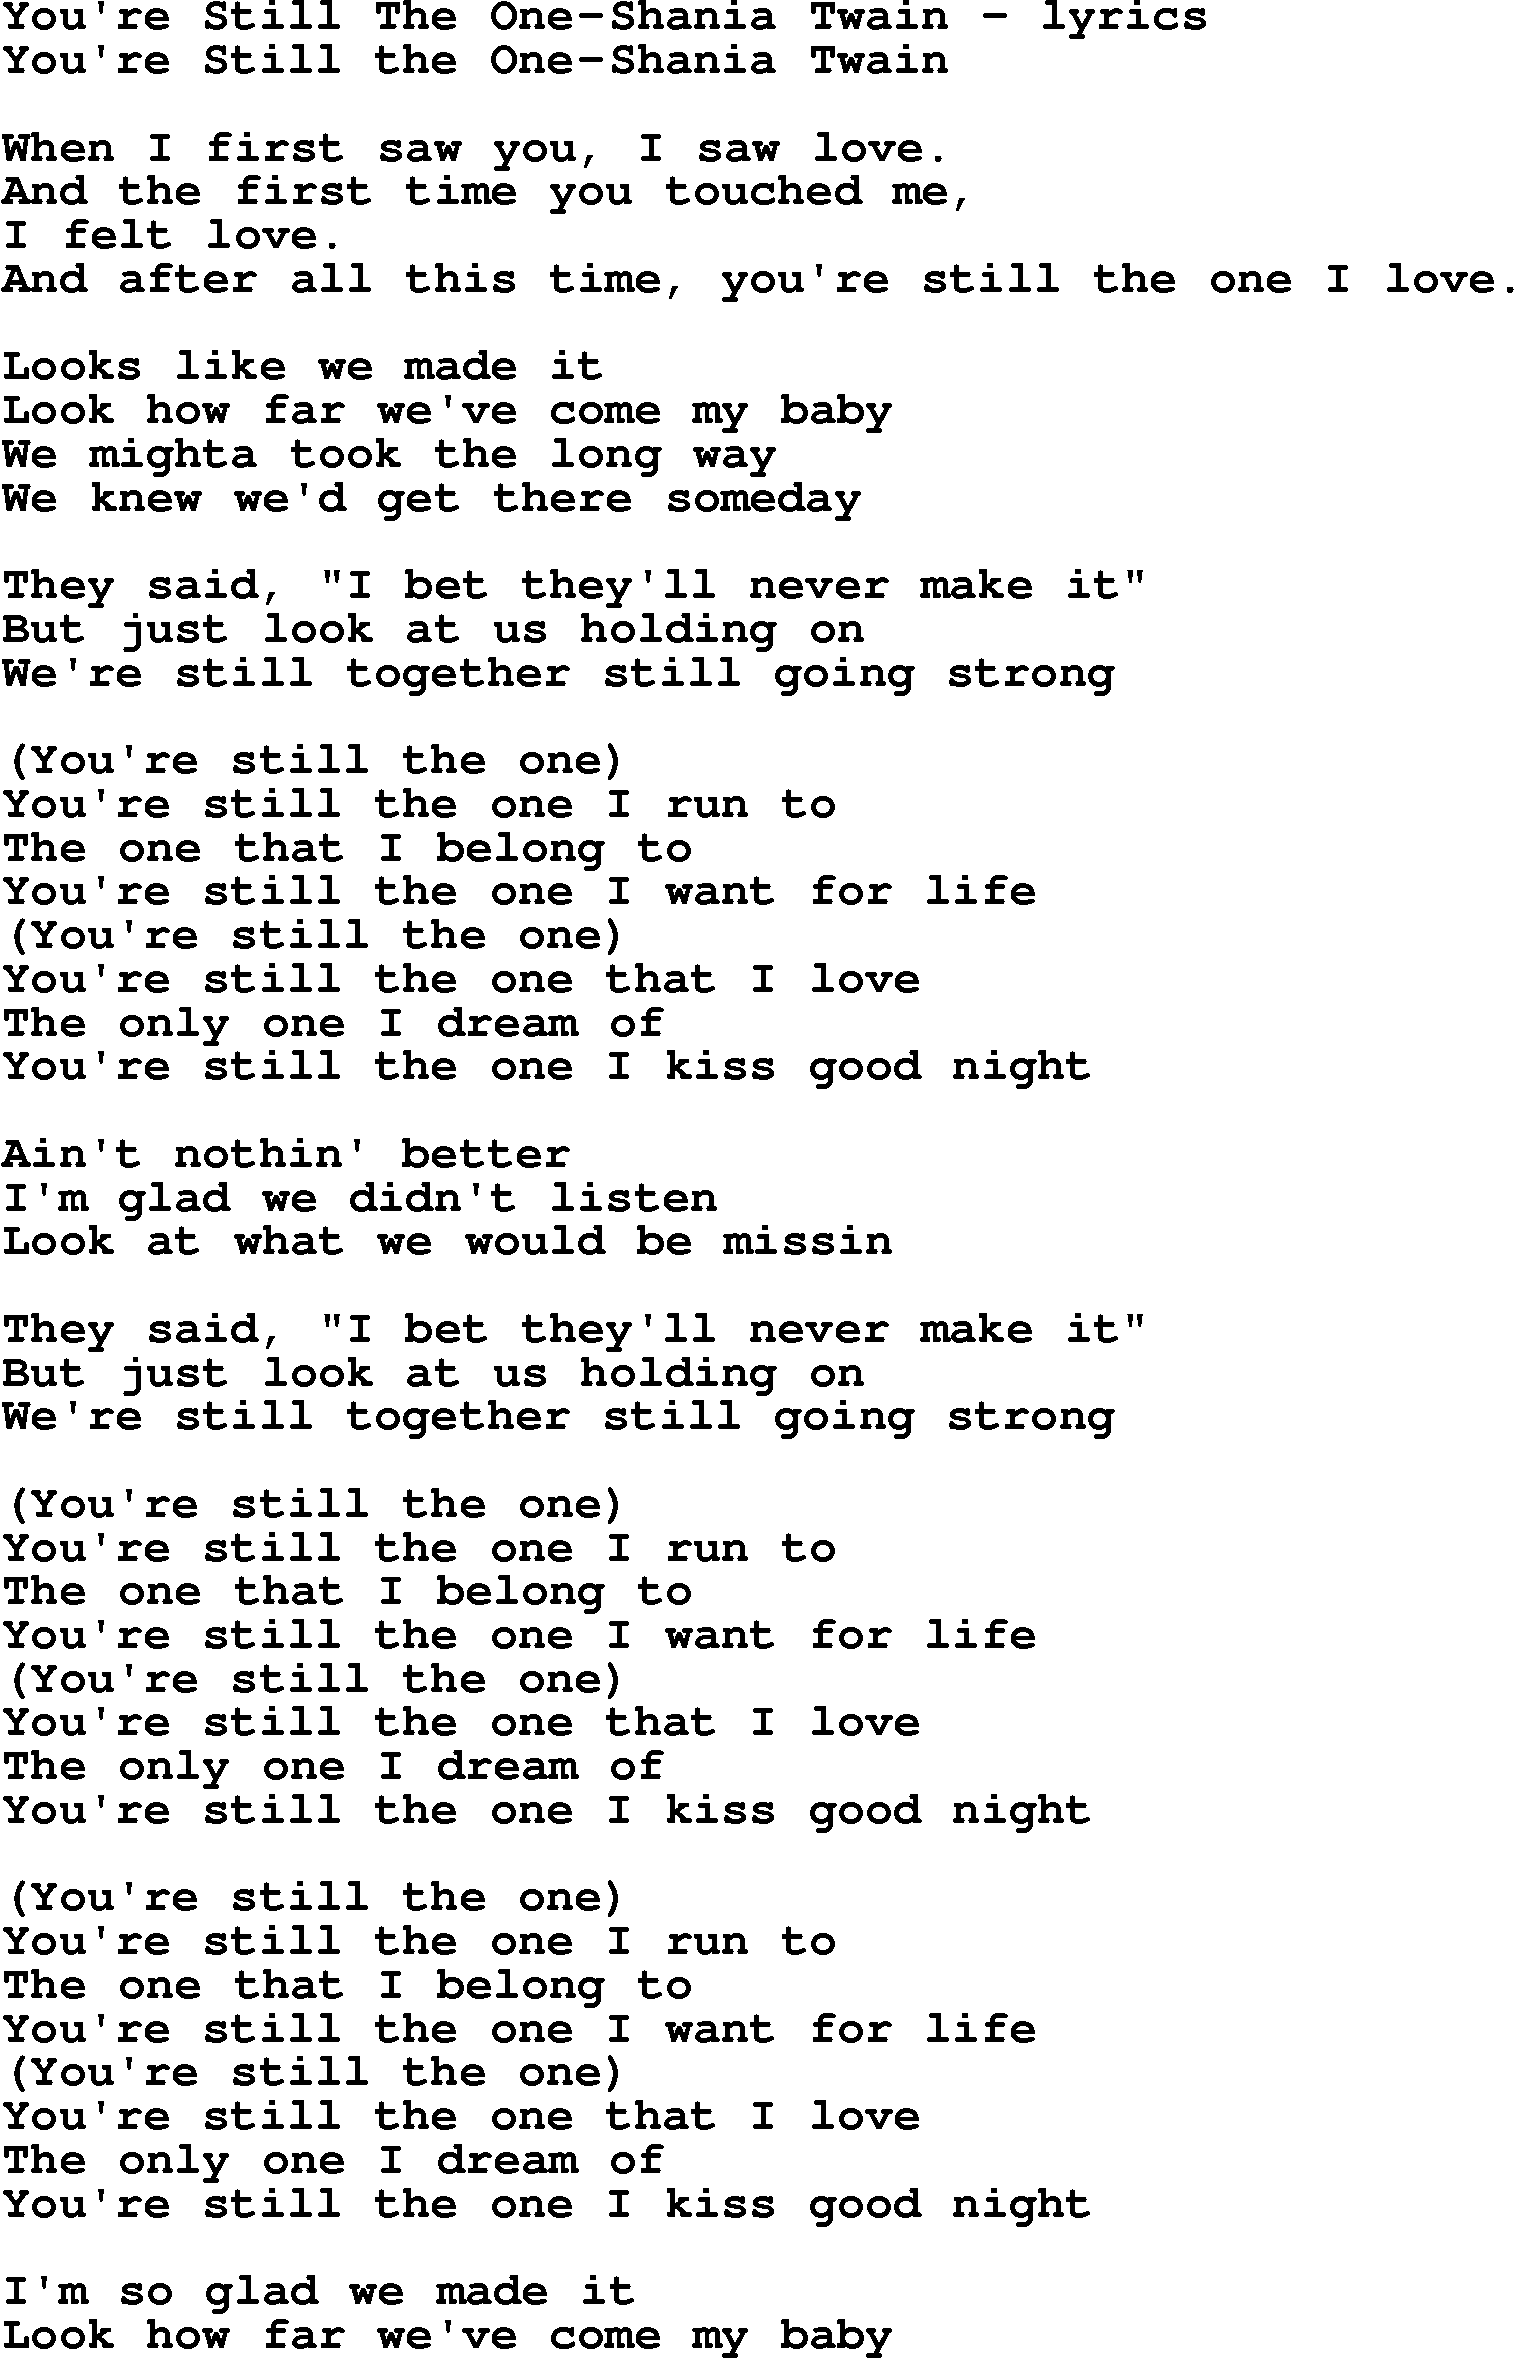 Love Song Lyrics for: You're Still The One-Shania Twain